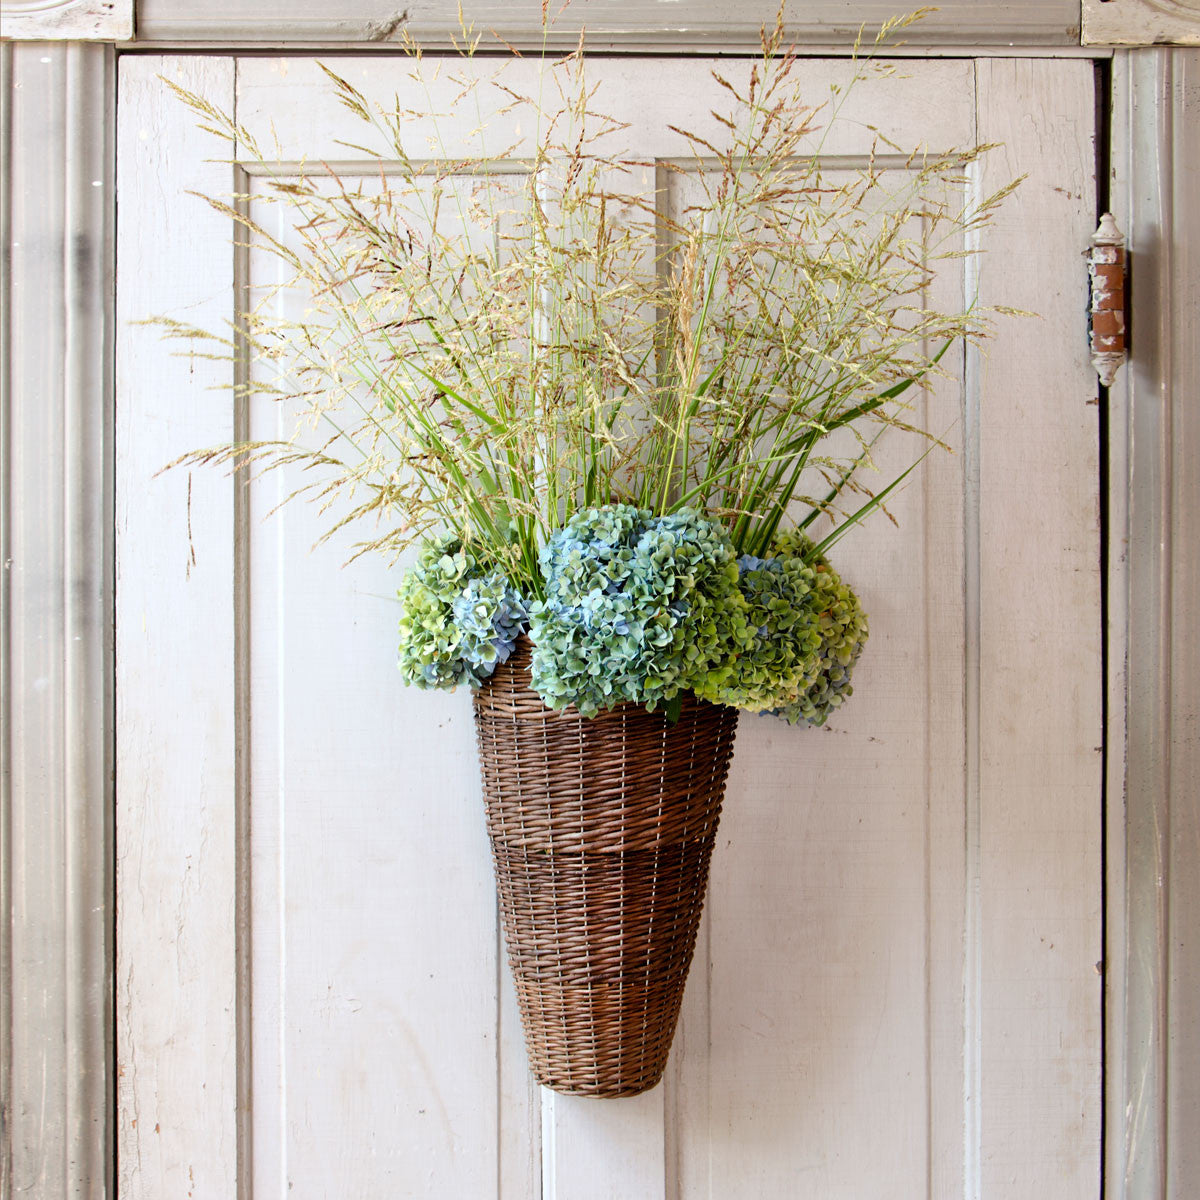 Basket on the Door. Oval Flower Basket.front Door Decoration. Straw-colored  Wicker Basket, Front Door Decoration.hanging Basket on the Door. 